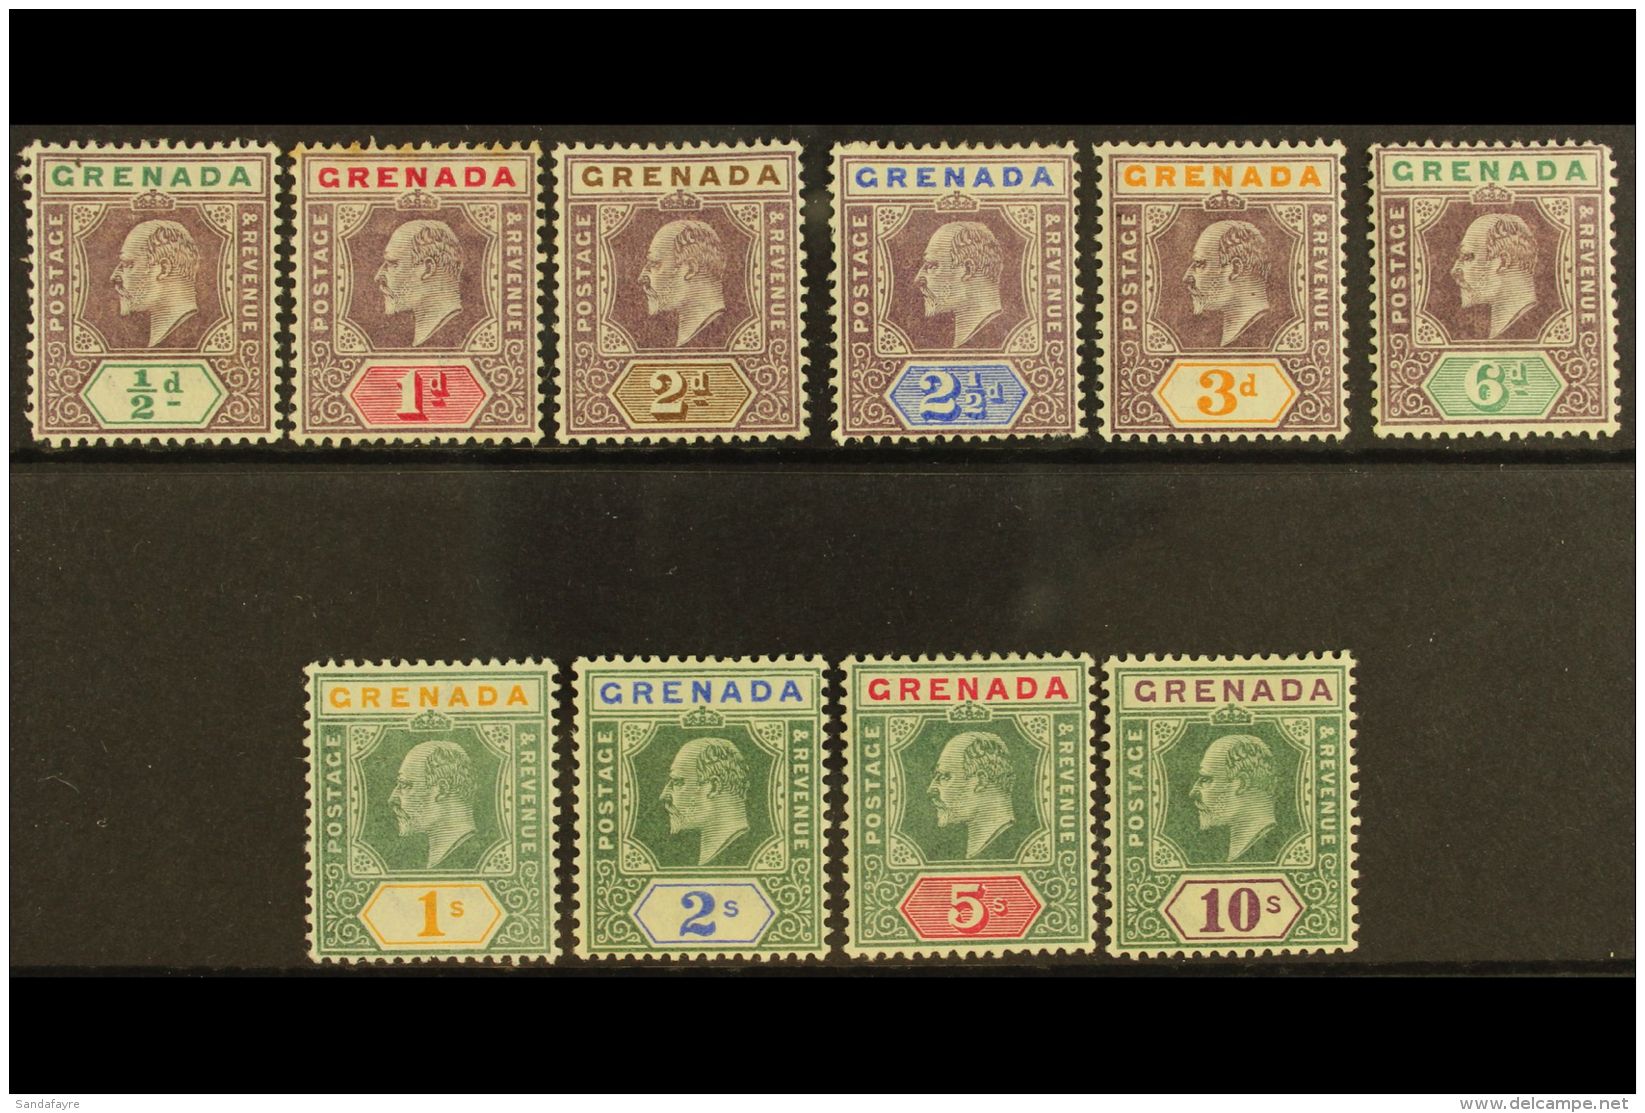 1902 Ed VII Set Complete, Wmk CA, SG 57/66, Very Fine Mint. (10 Stamps)  For More Images, Please Visit... - Grenada (...-1974)